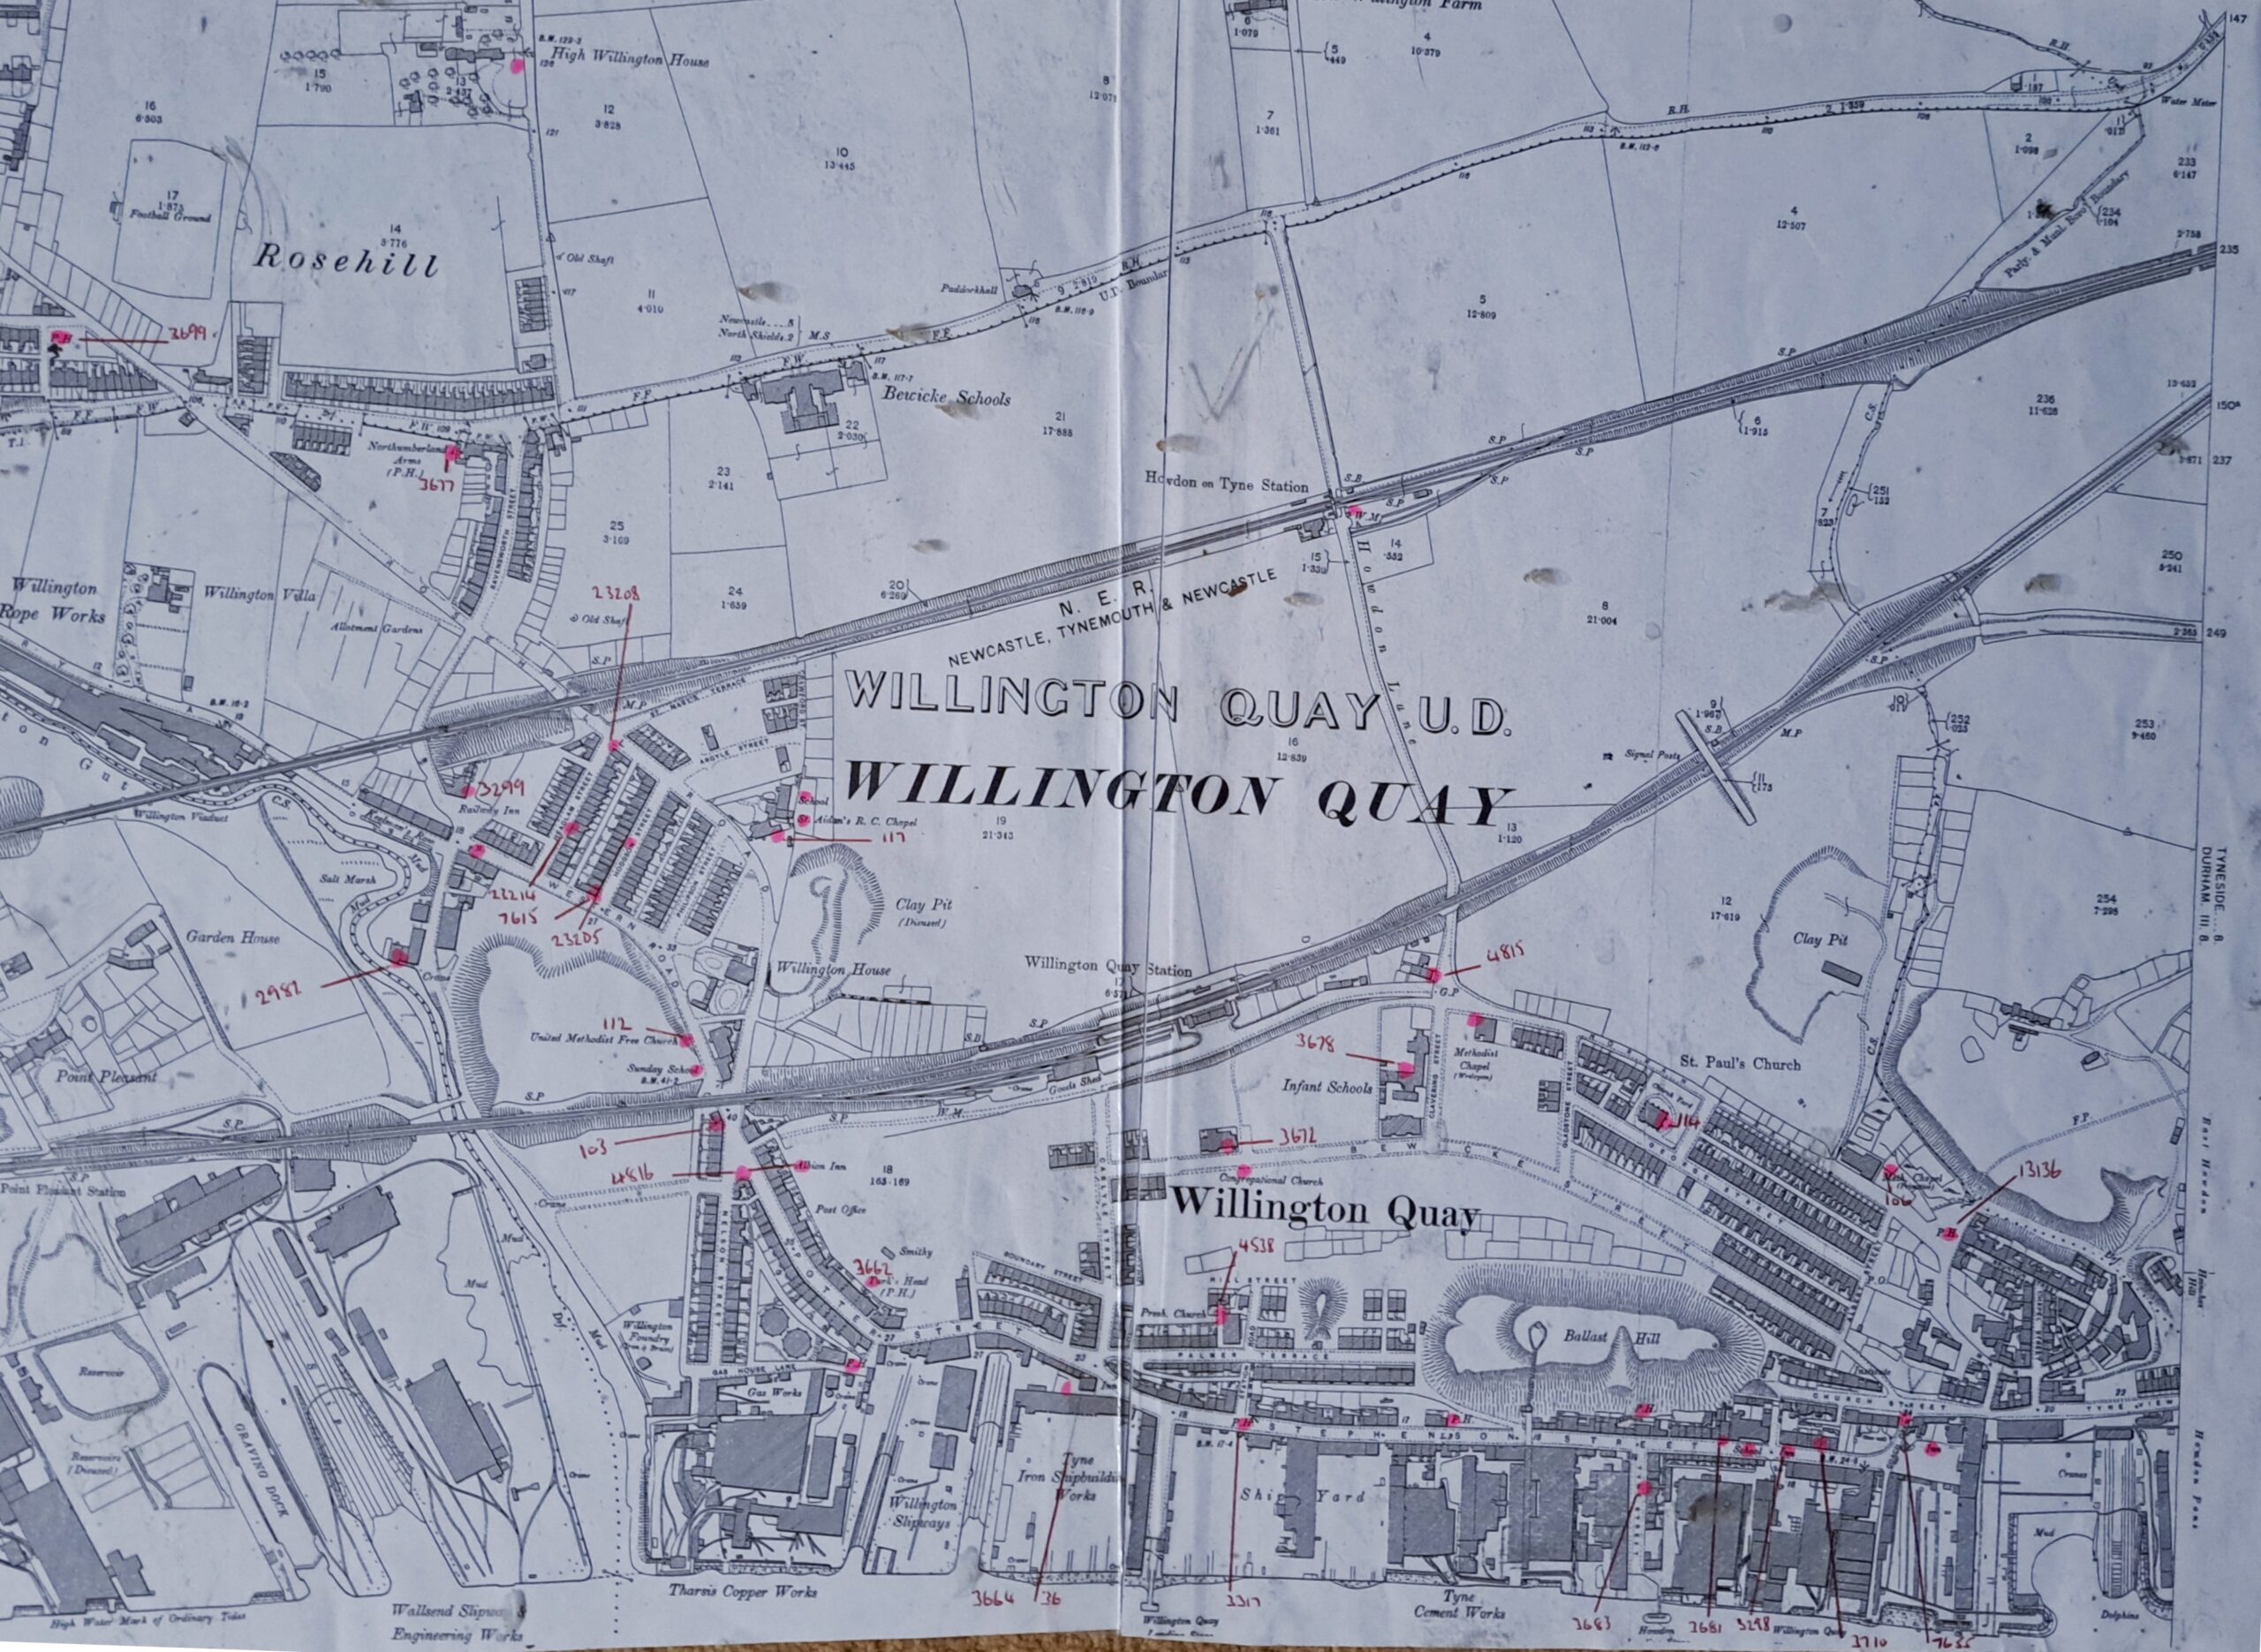 22 - Willington Quay, Points of Interst